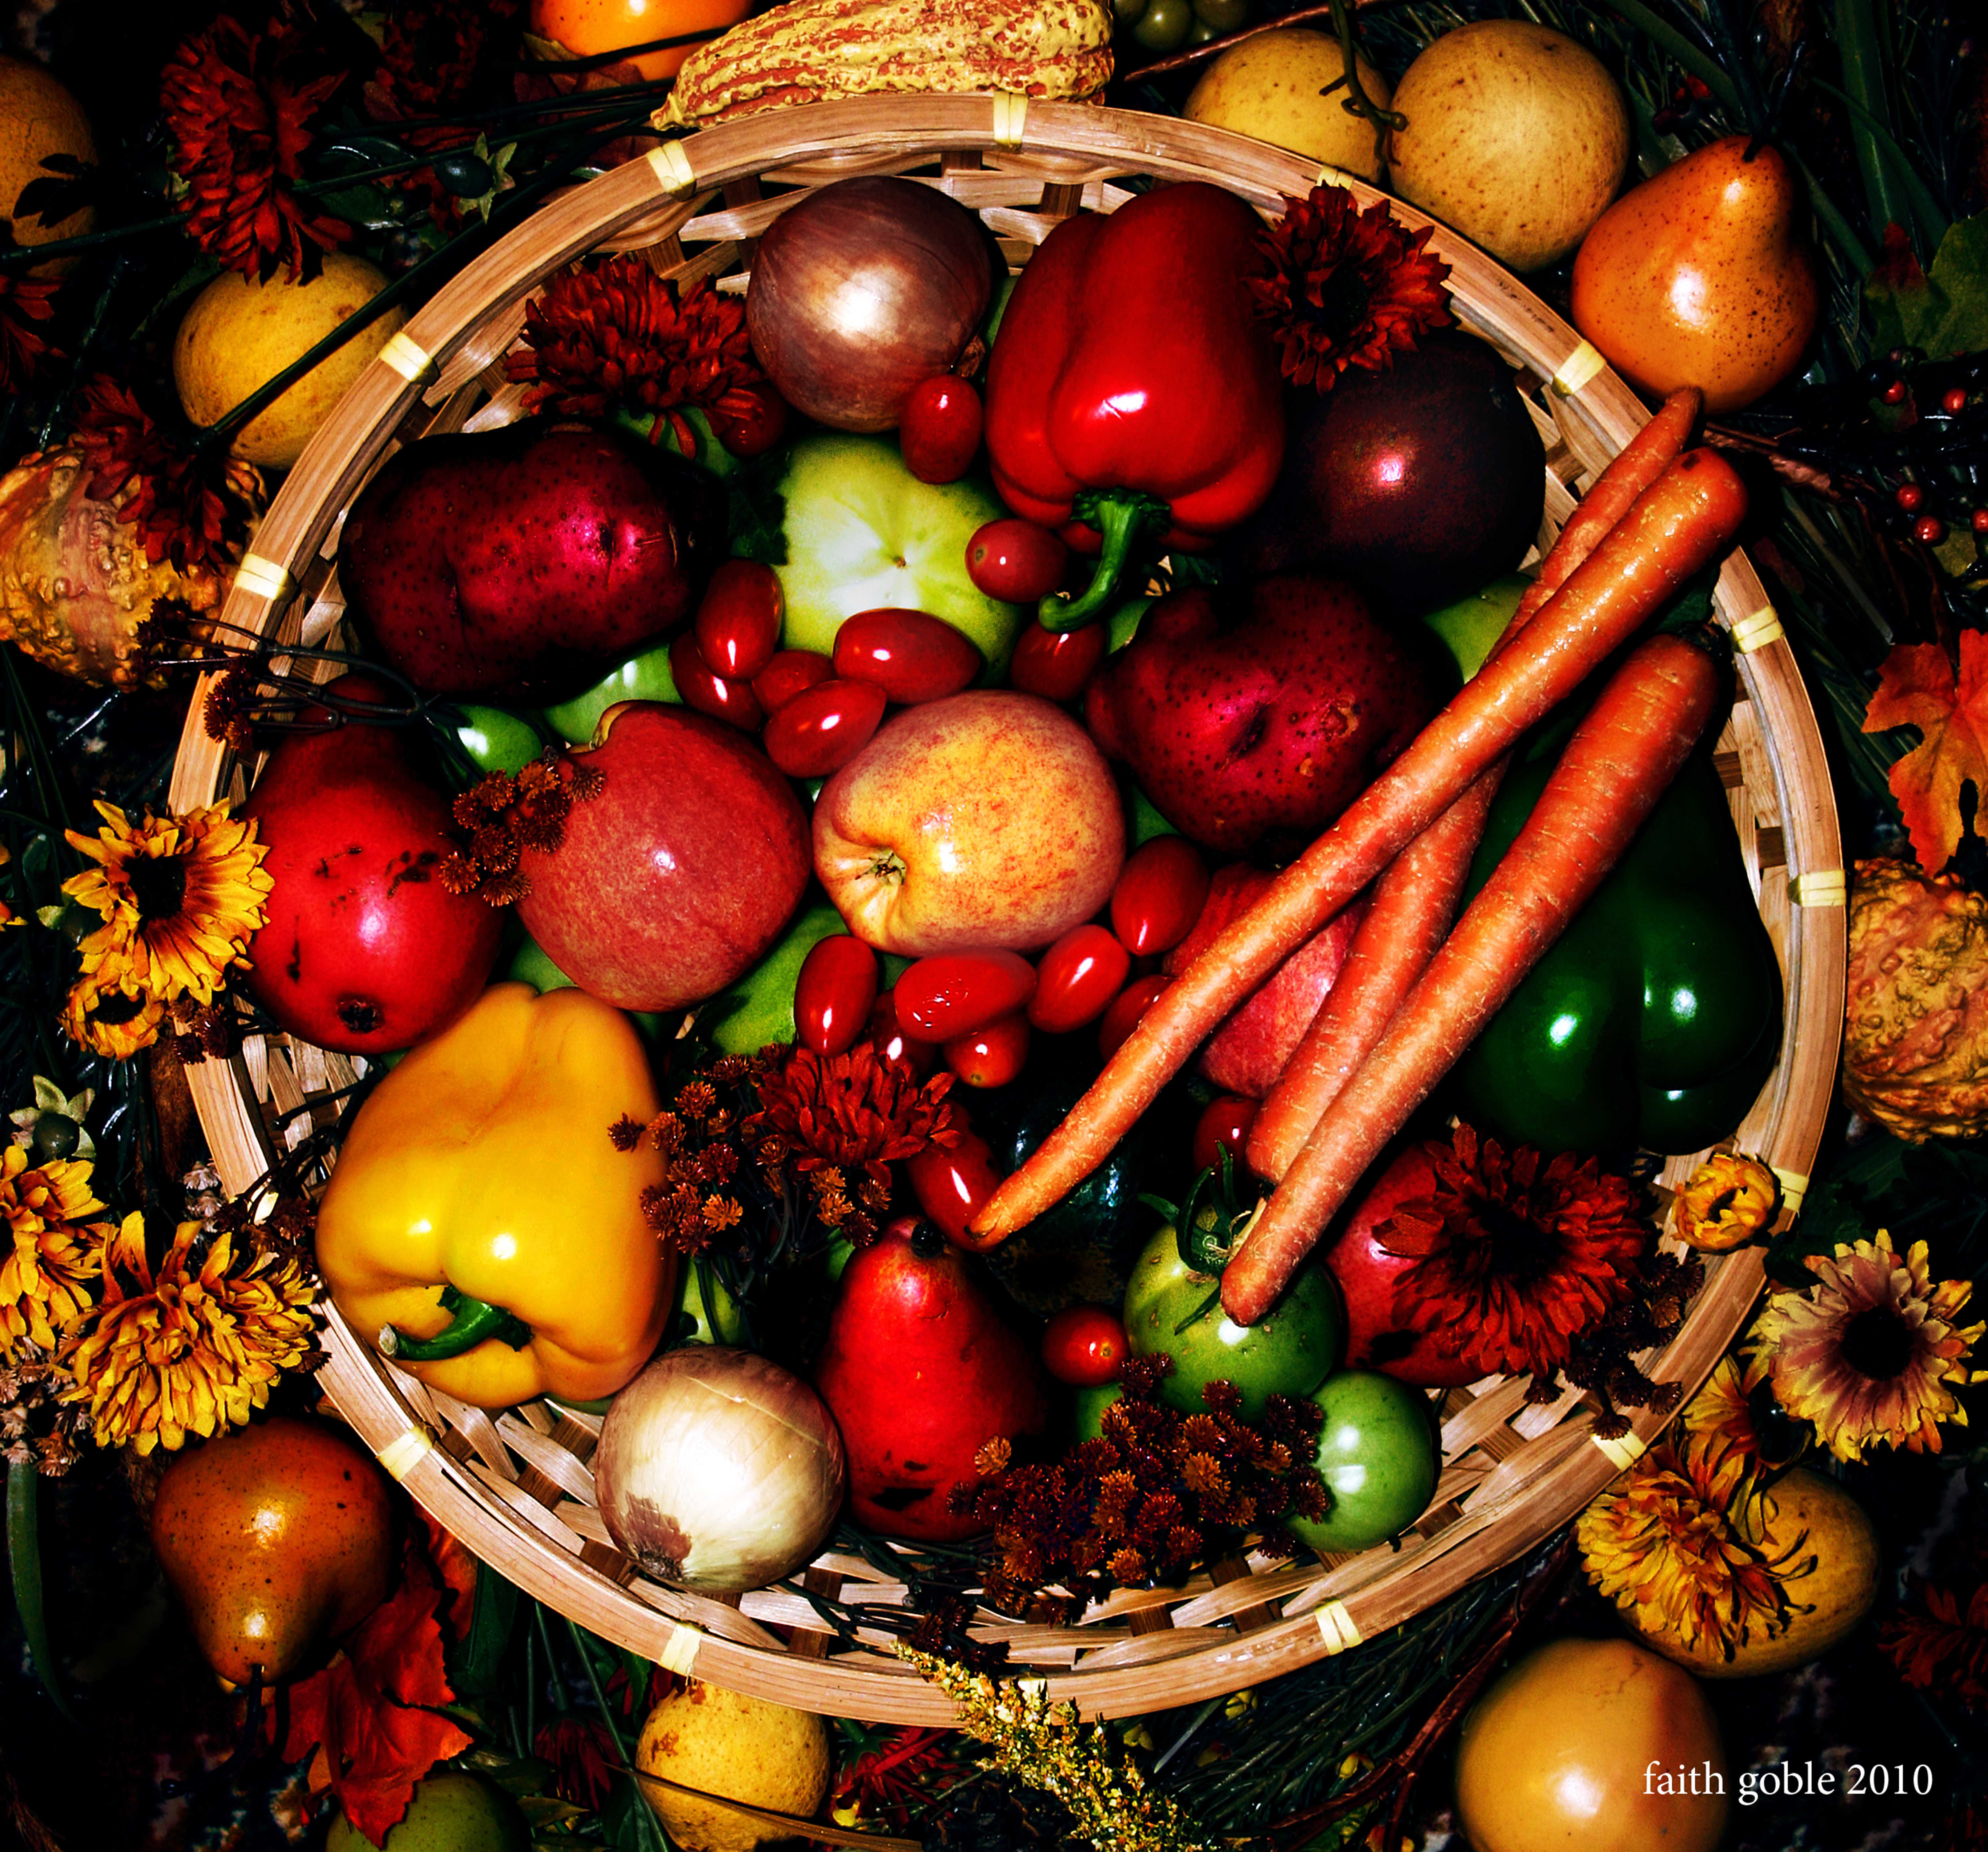 A basket of high-fiber fruits and veggies